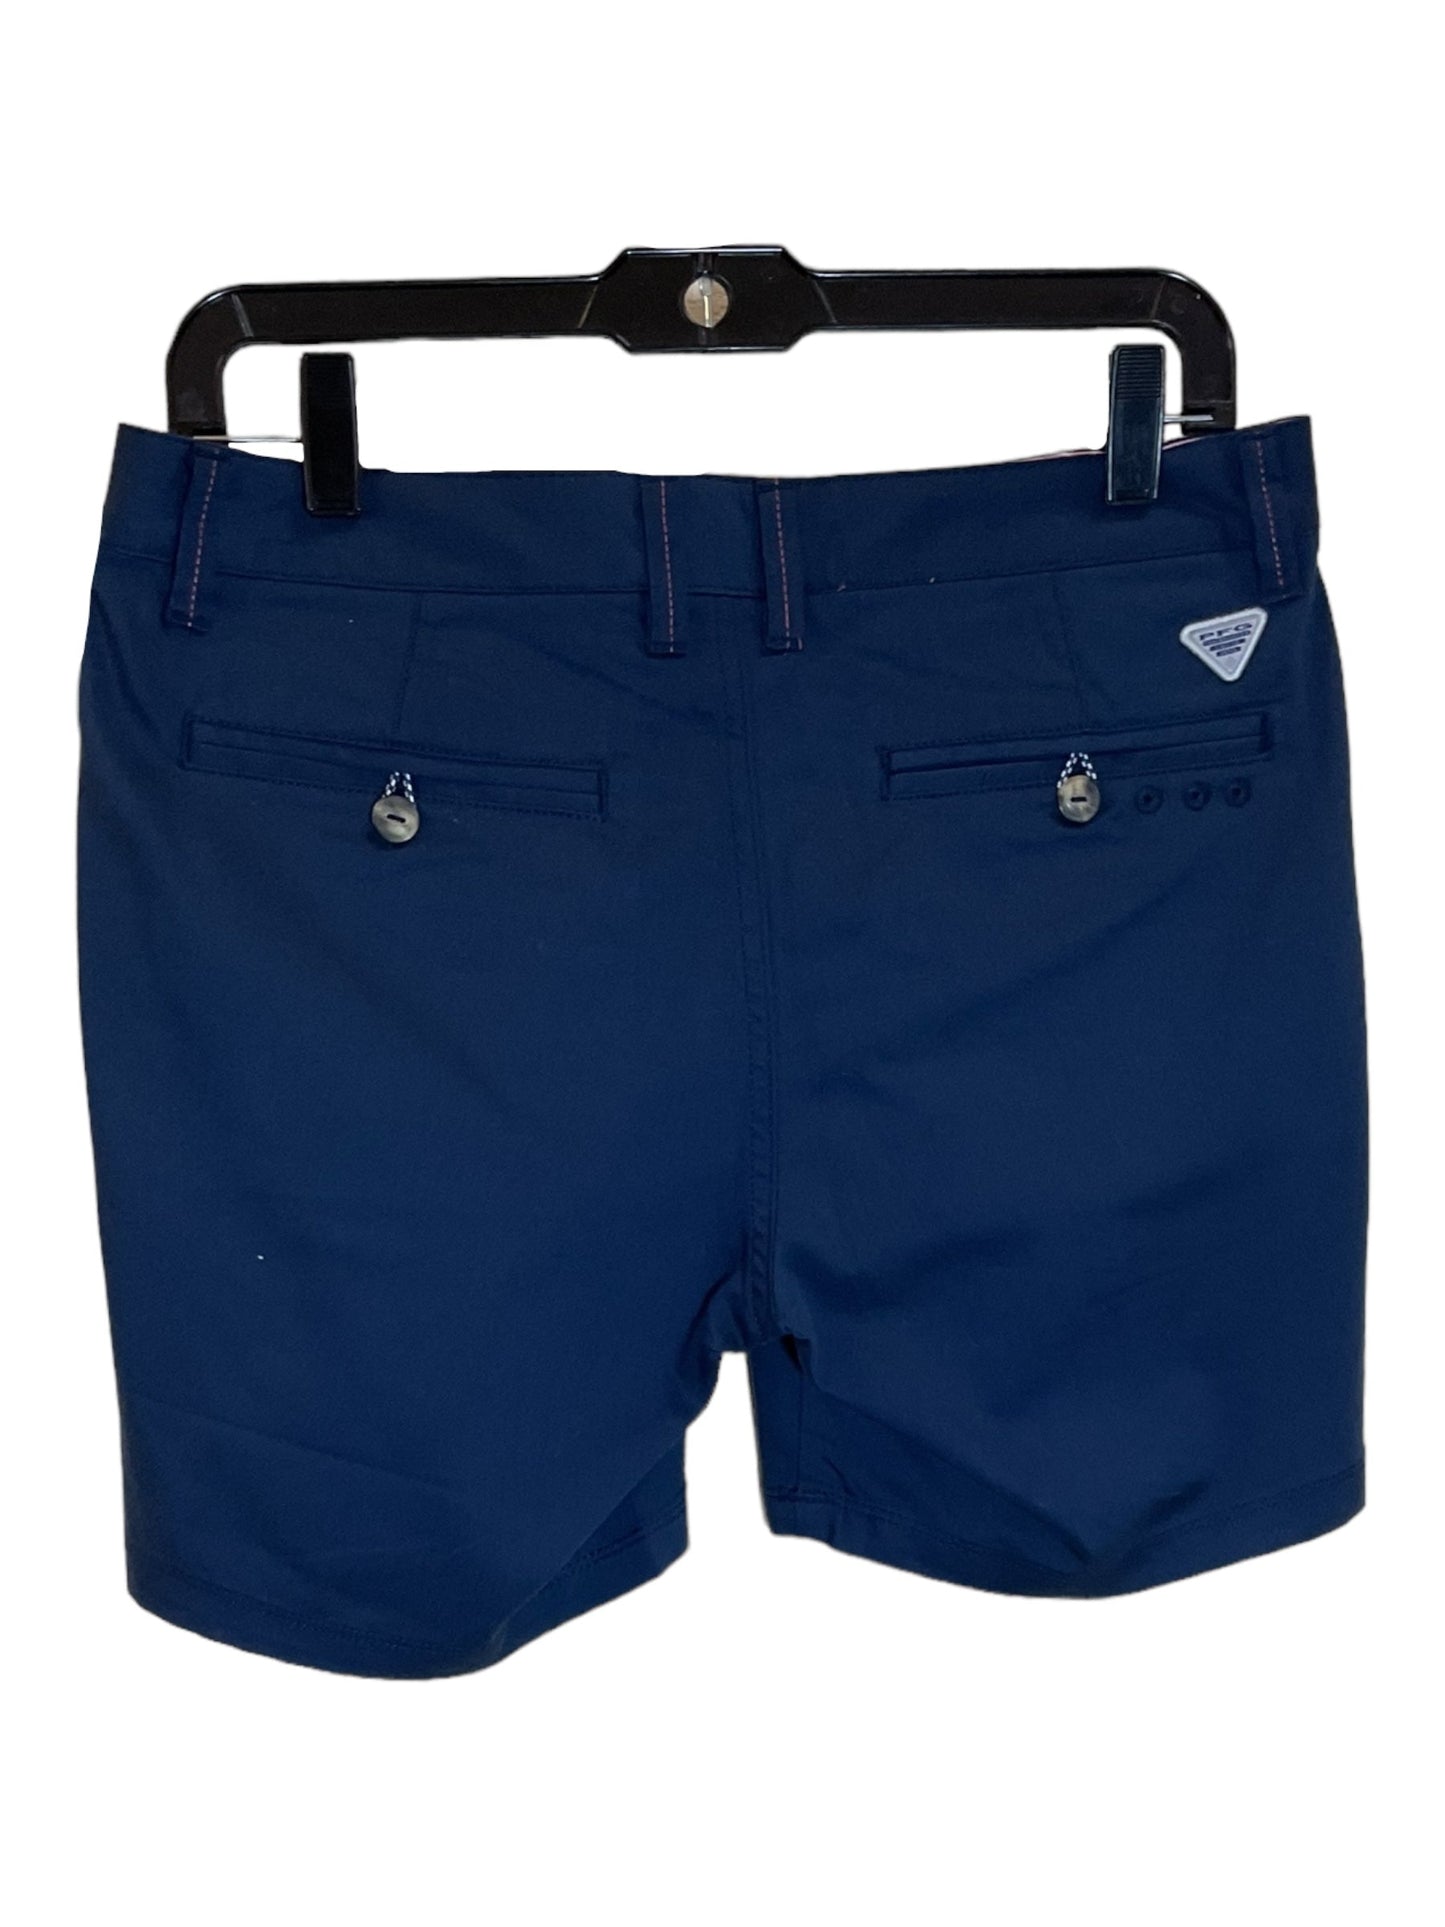 Blue Shorts Columbia, Size 6